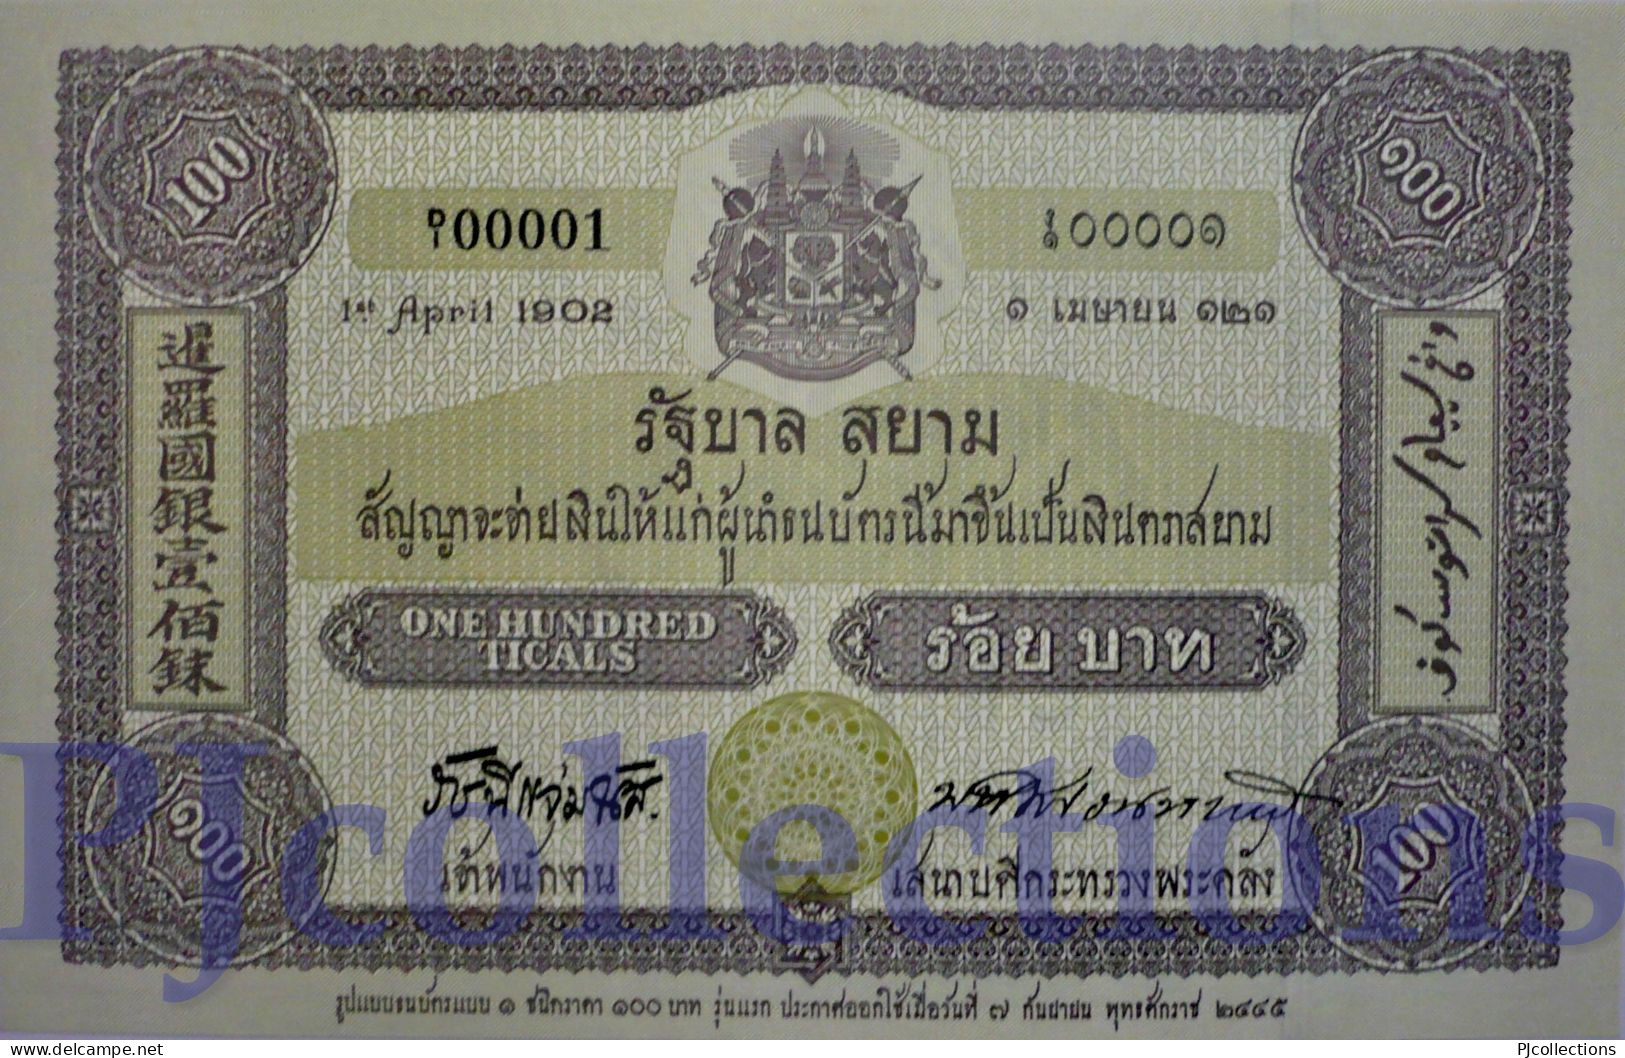 THAILAND 100 BAHT 2002 PICK 110 UNC - Thailand